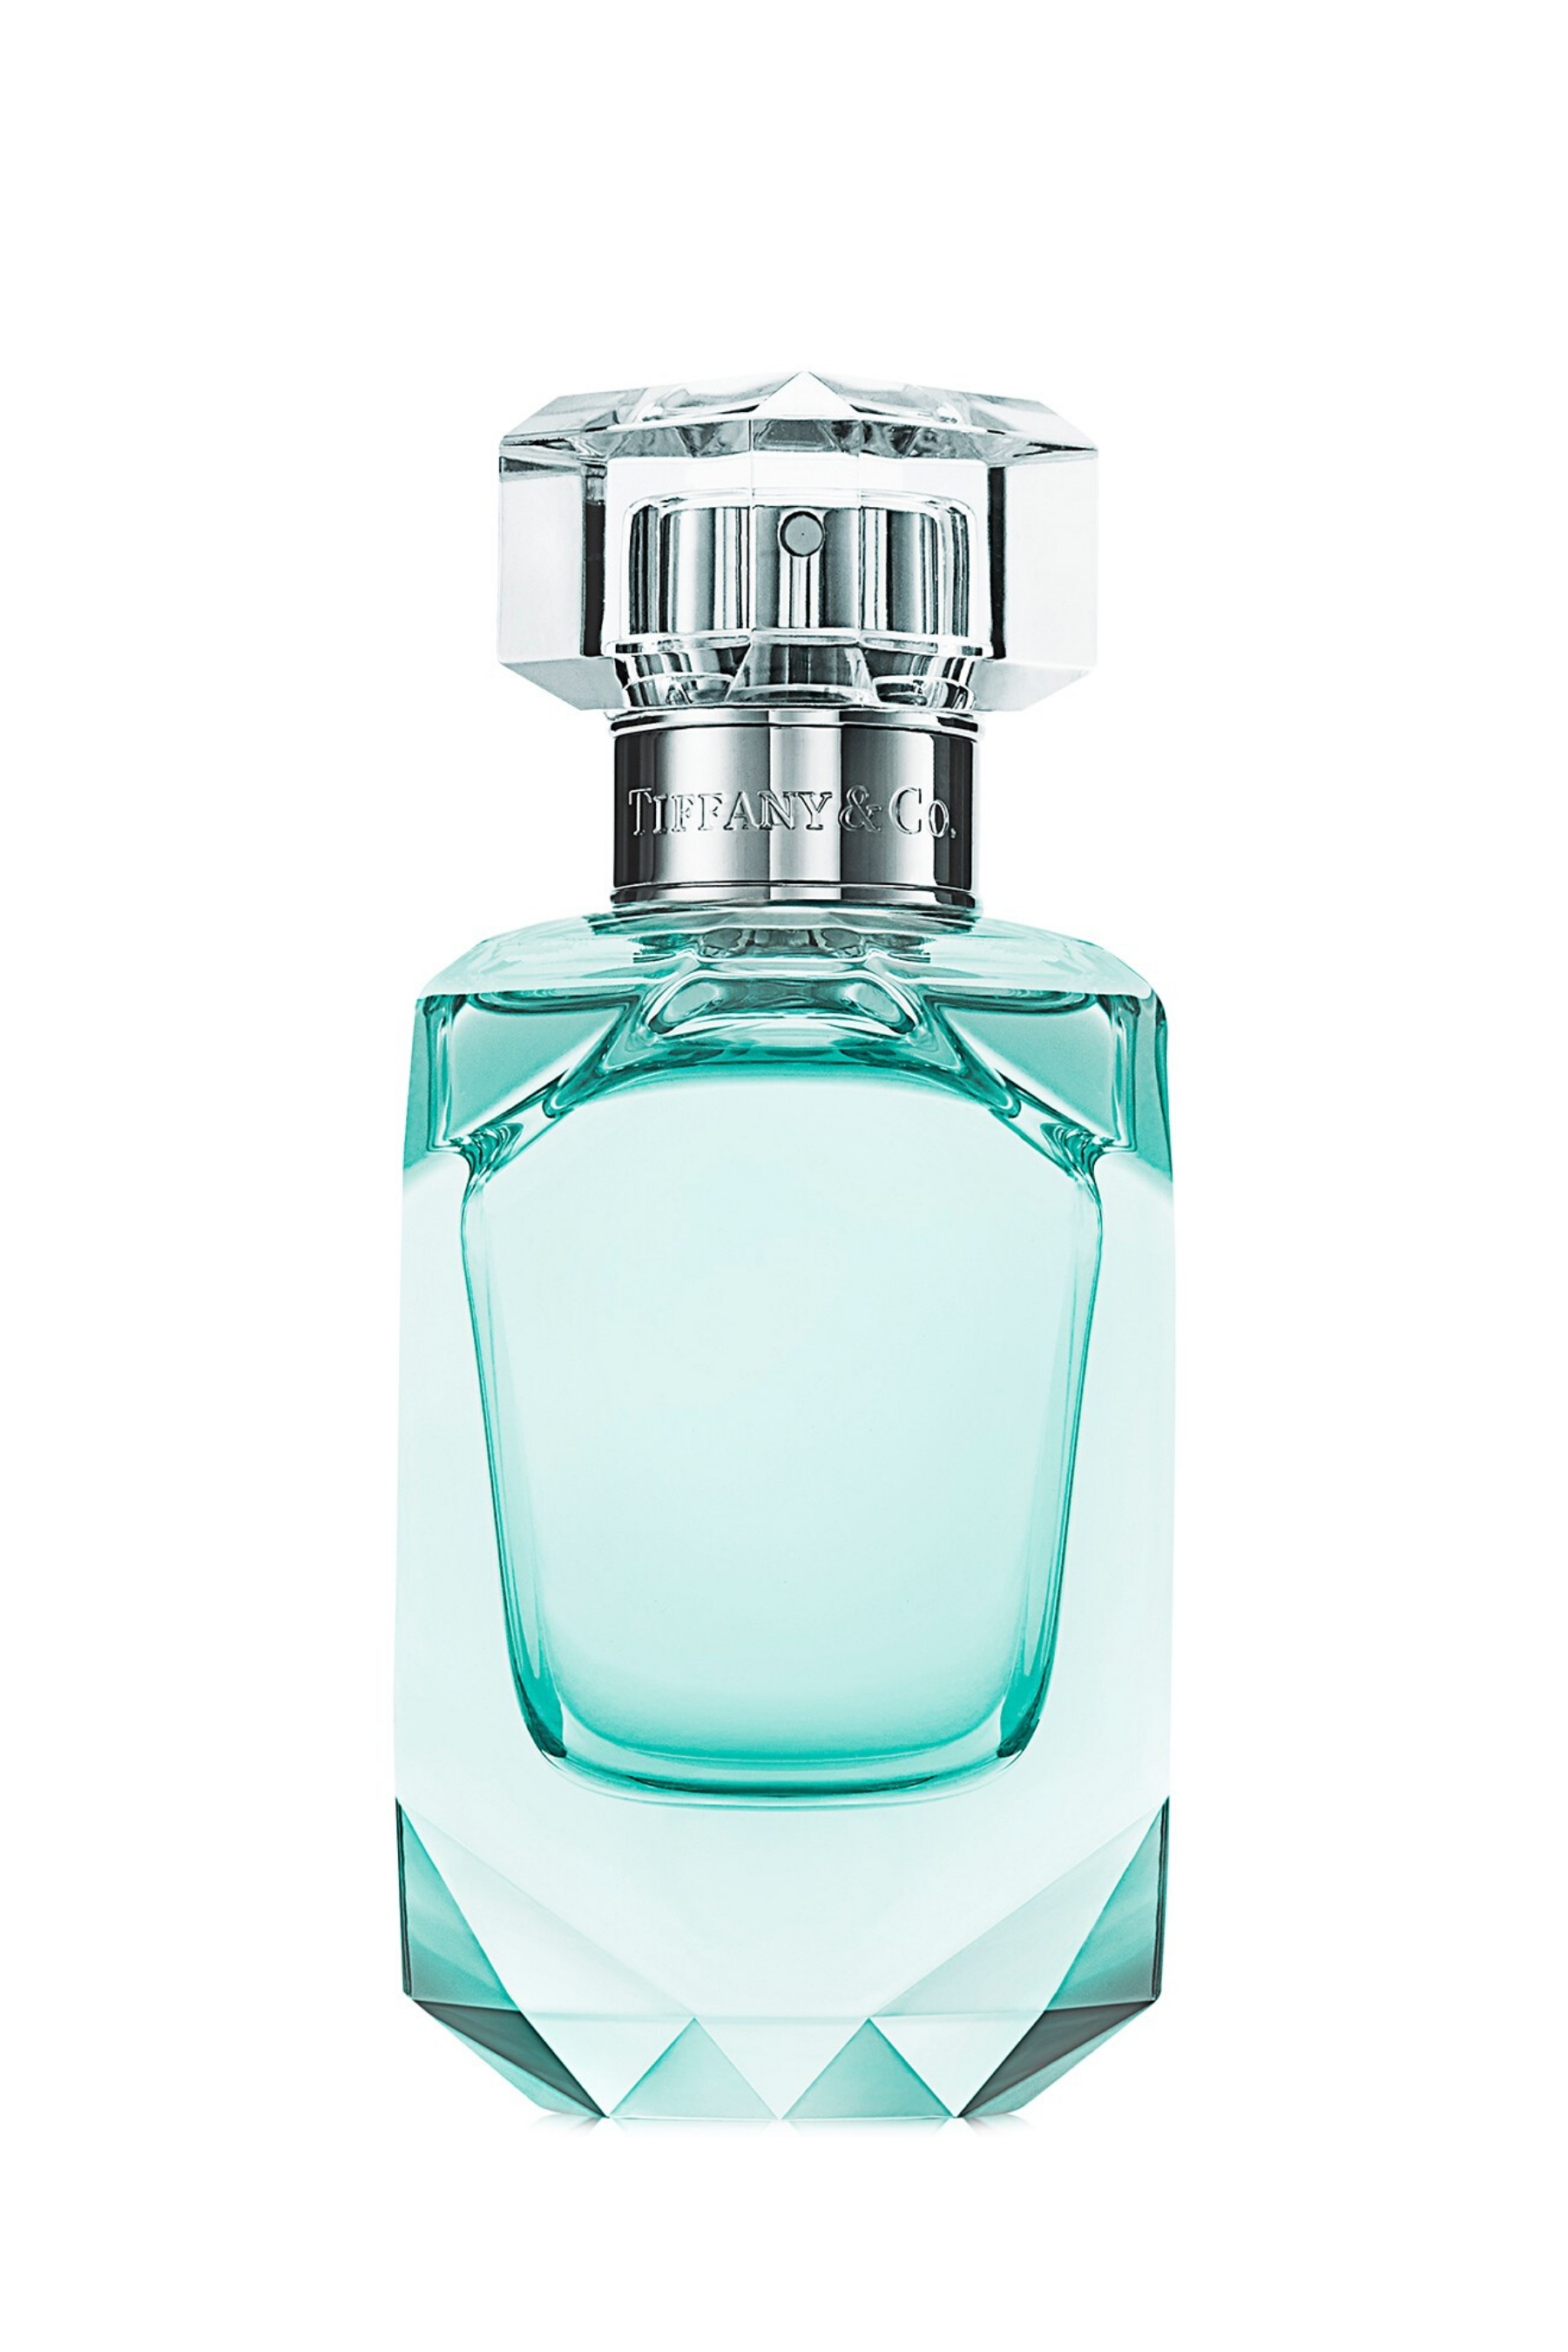 Tiffany & Co  The Perfume Shop